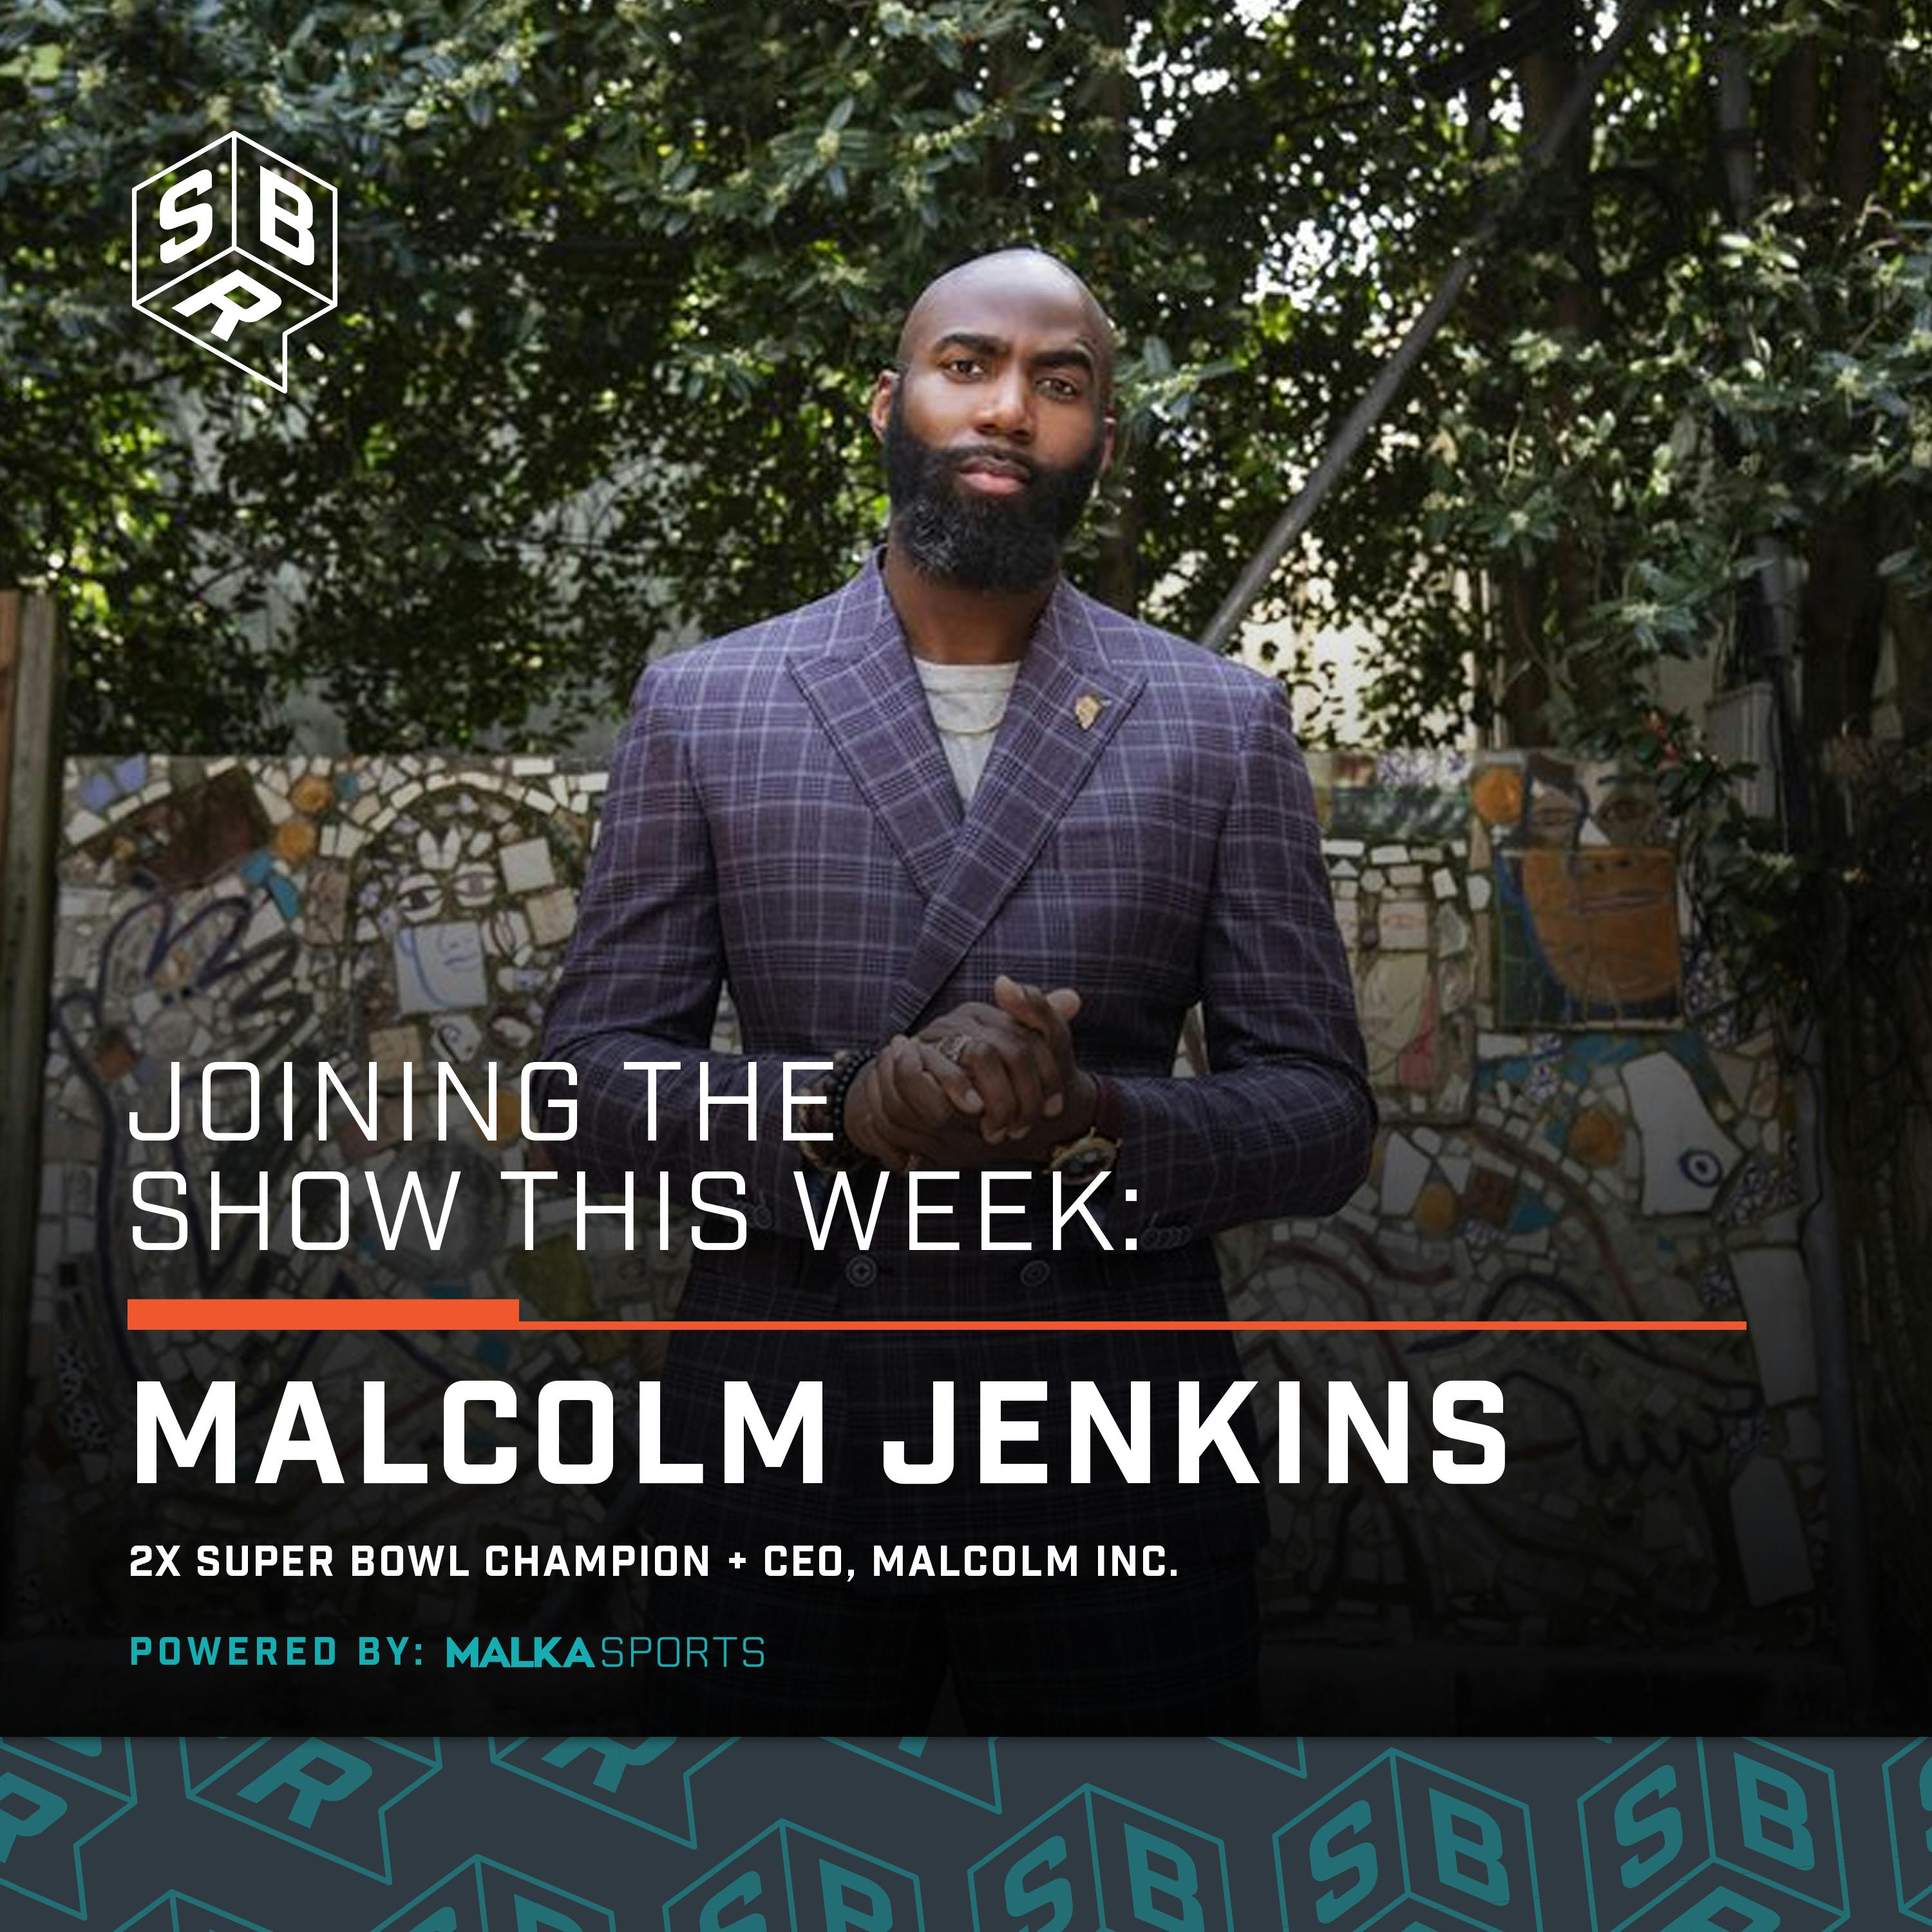 Malcolm Jenkins (@MalcolmJenkins) - 2-Time Super Bowl Champ & CEO of Malcolm Inc.